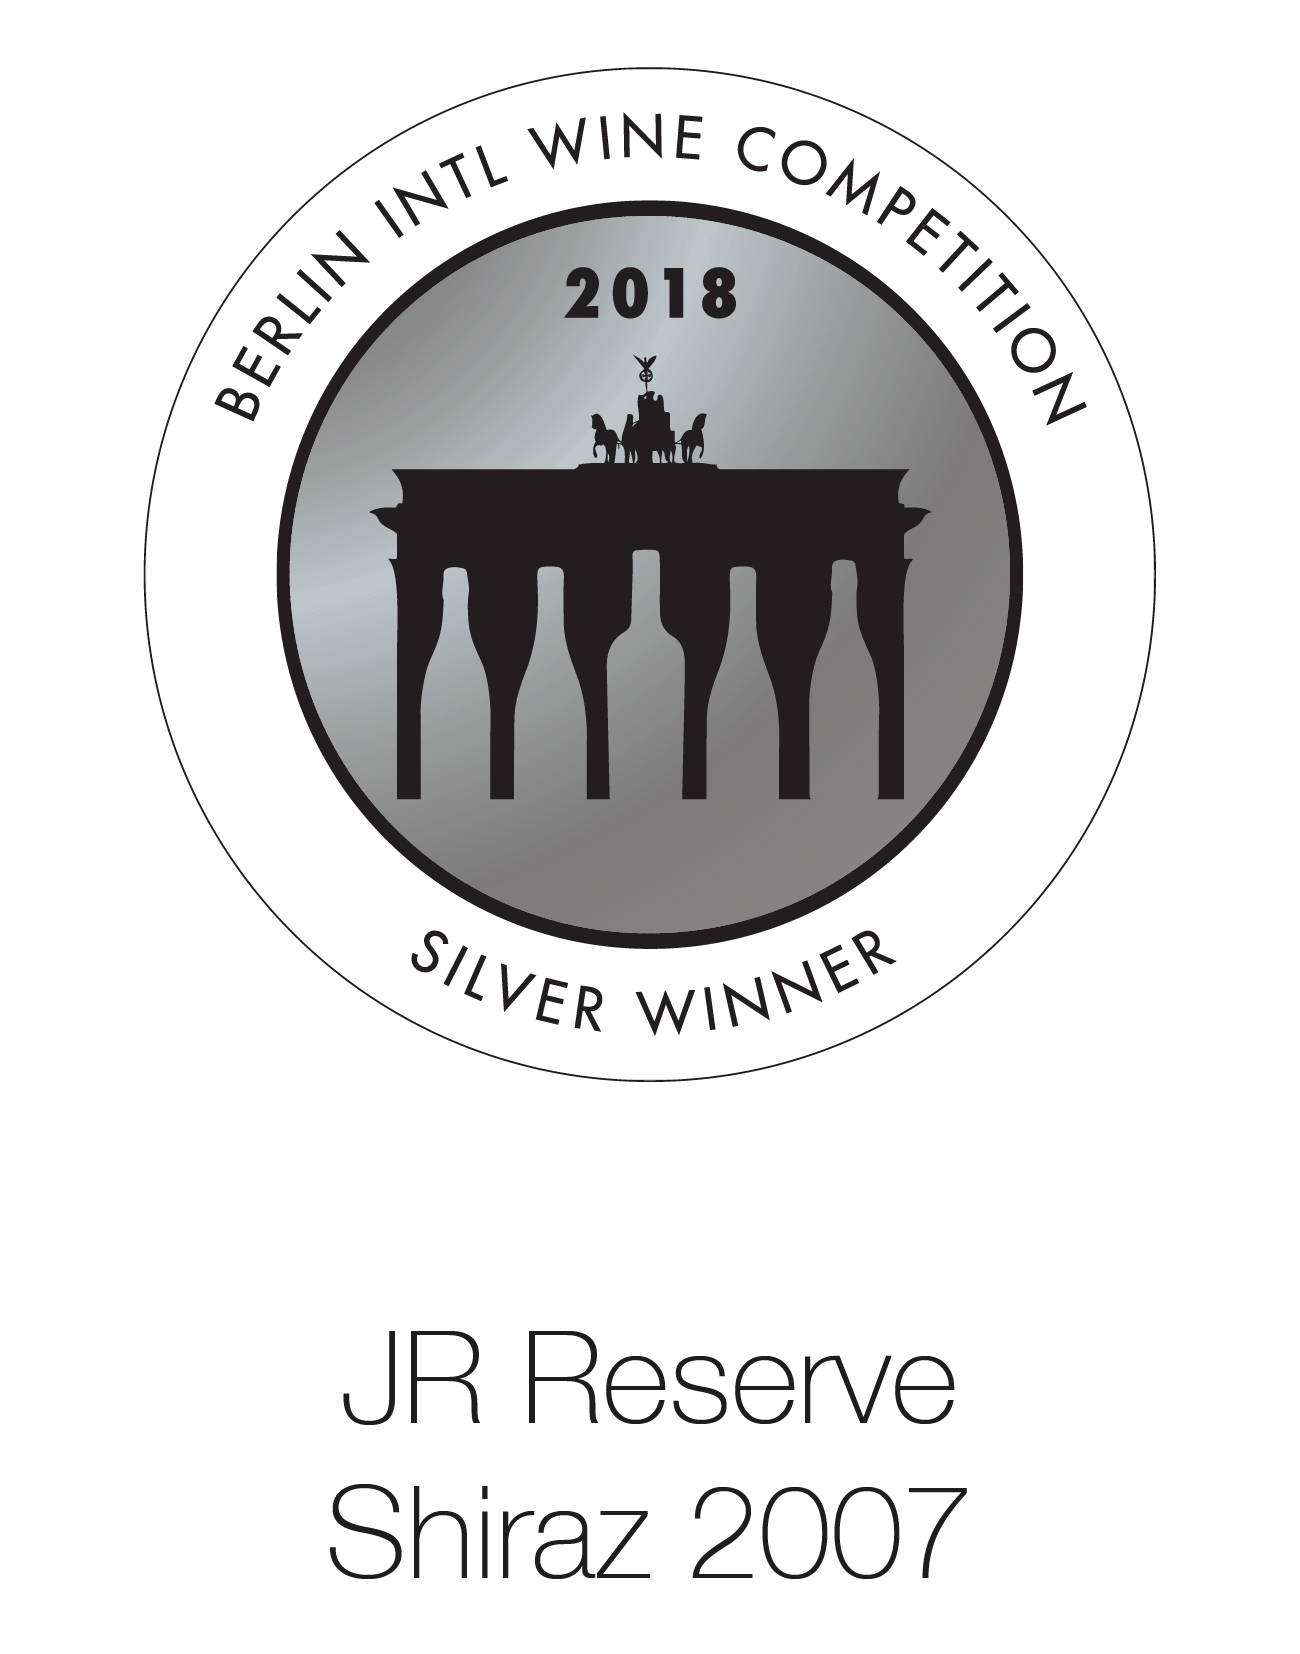 JR Reserve Shiraz 2007 - Berlin International Wine Competition 2018